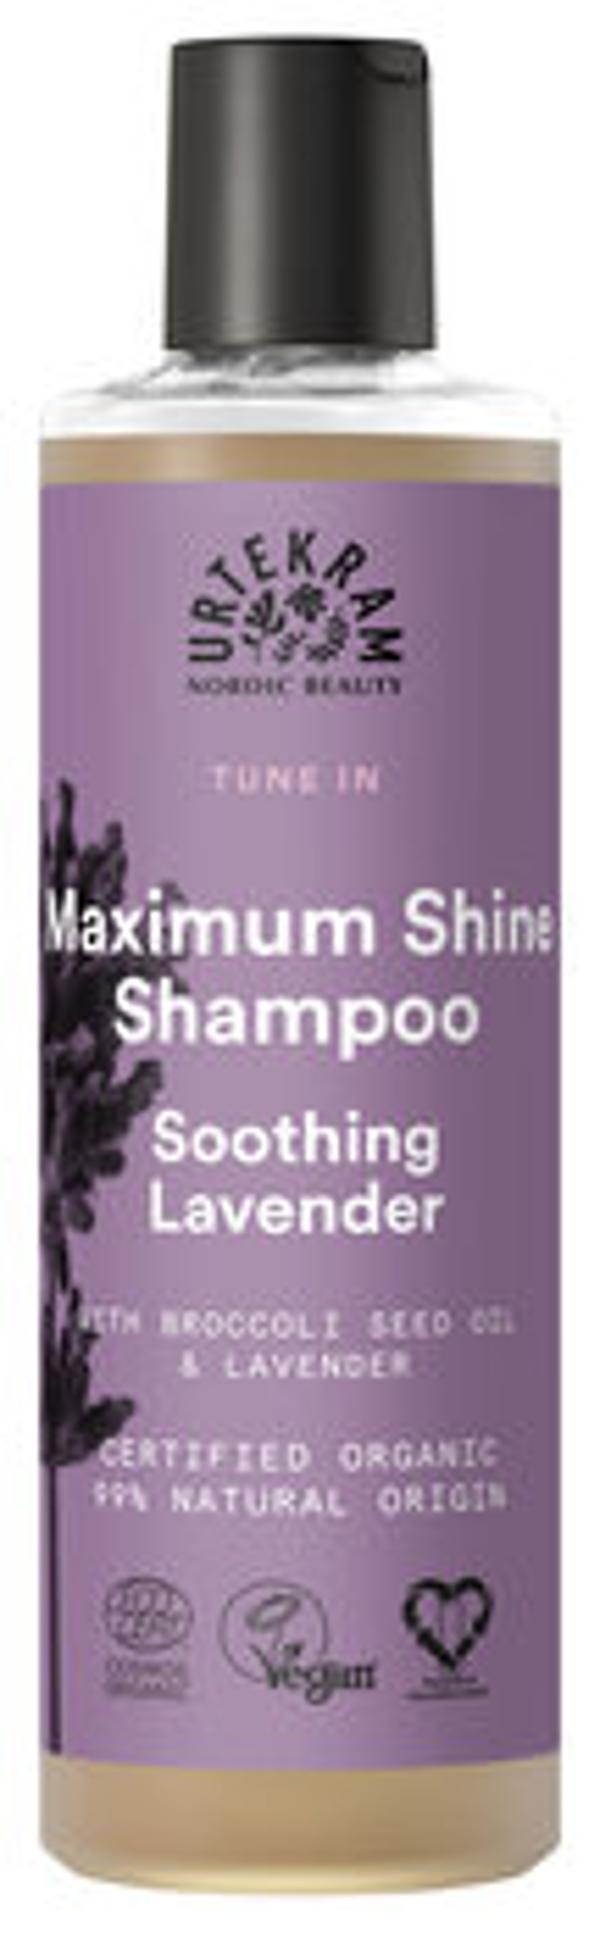 Produktfoto zu Shampoo Soothing Lavender 250ml